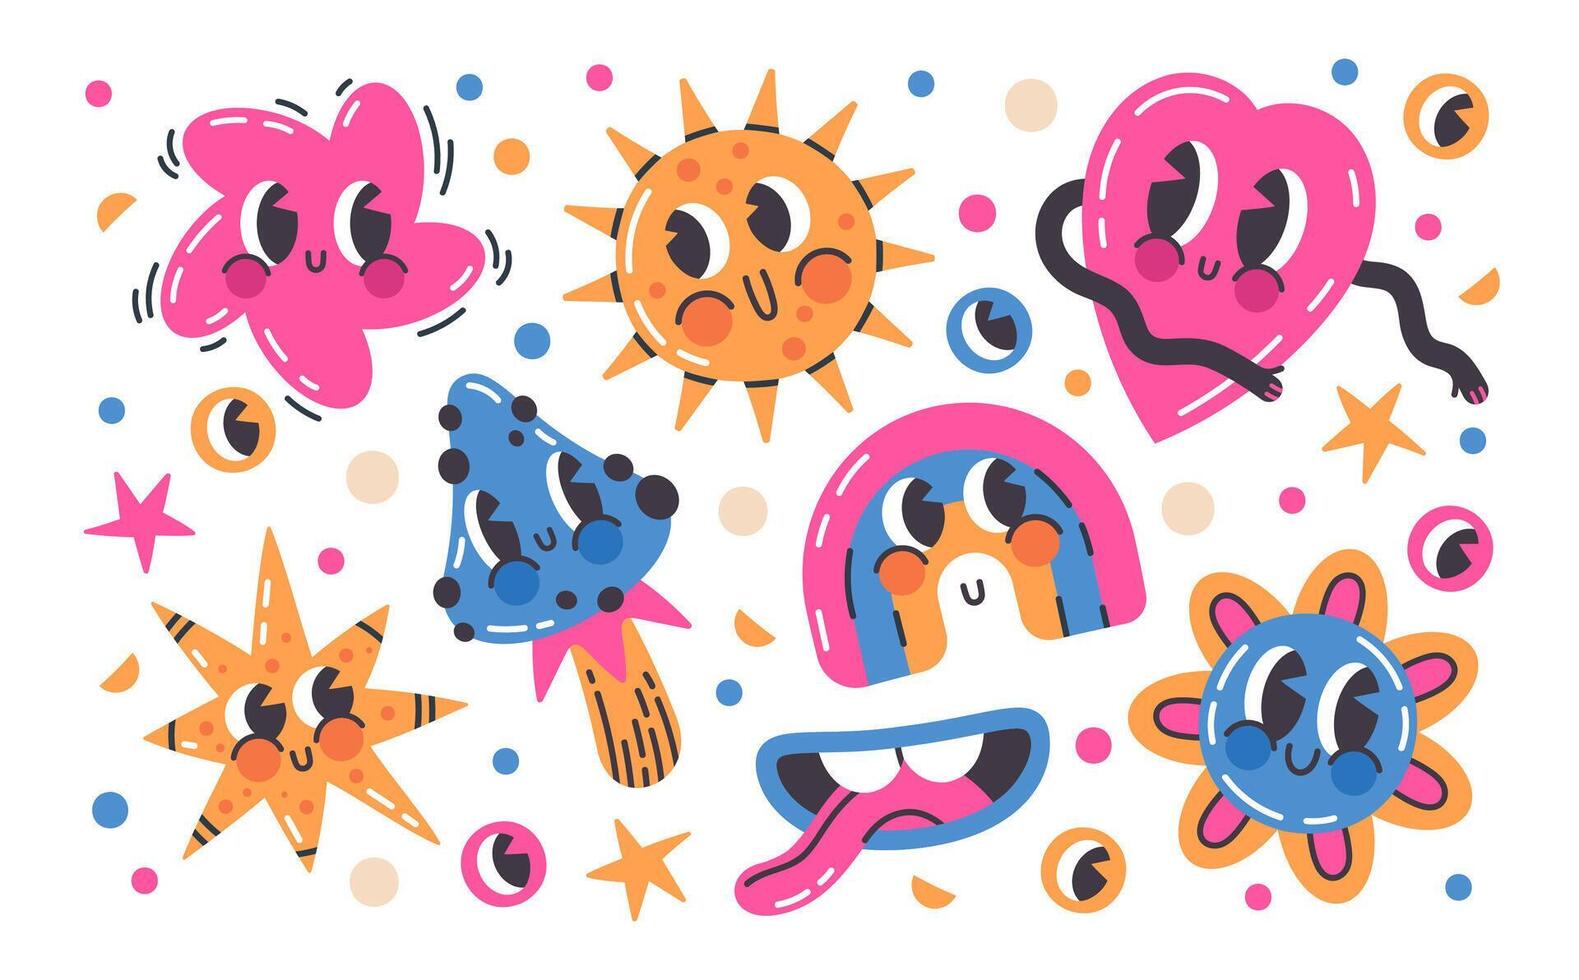 Abstract comic emoji characters. Cartoon cute doodle elements, heart, star and mushroom emoji vector illustration set. Bright hand drawn mascots